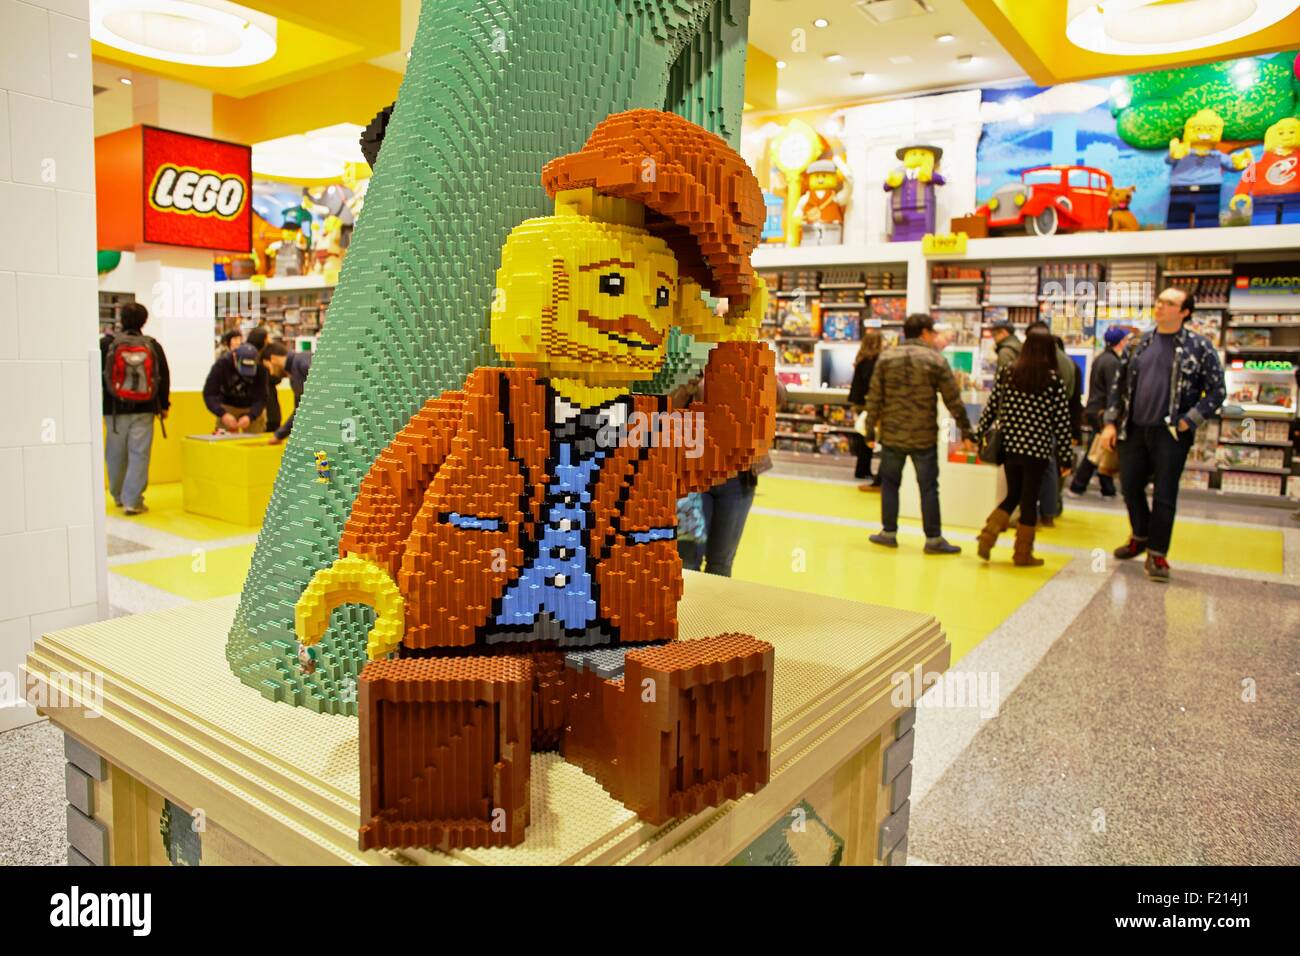 United States, New York, Manhattan, Lego store Stock Photo - Alamy